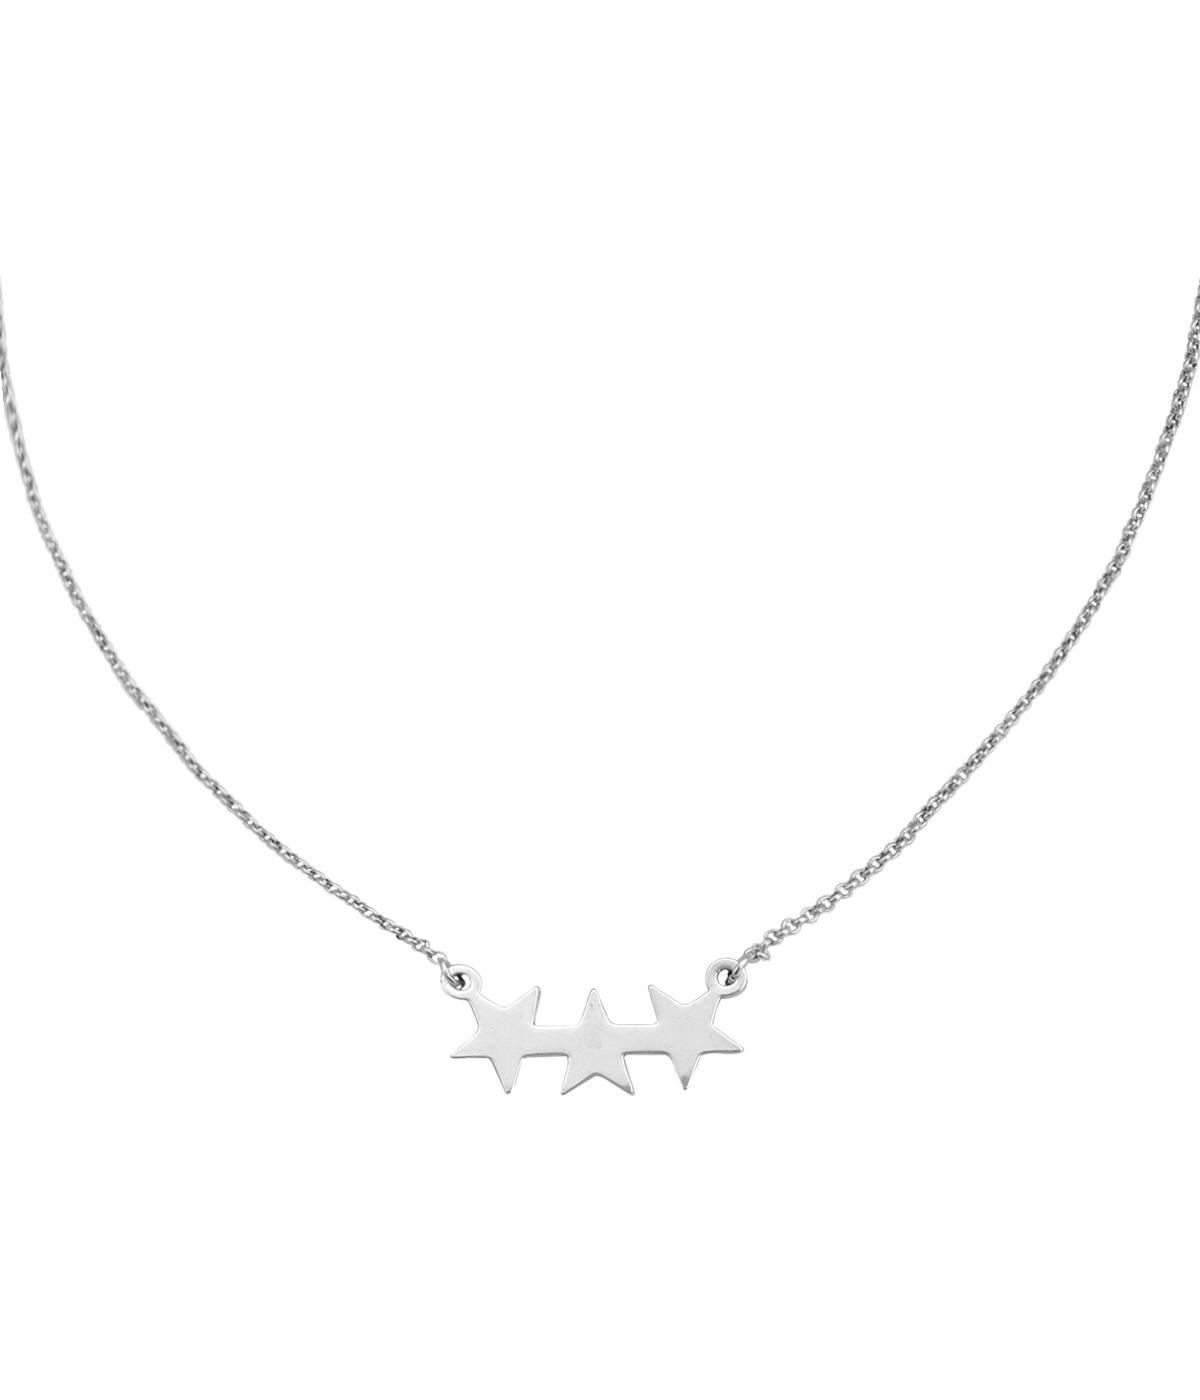 Hestness Anne Lise | 3 stars necklace -latest NECKLACE,Layer Sets design 2021